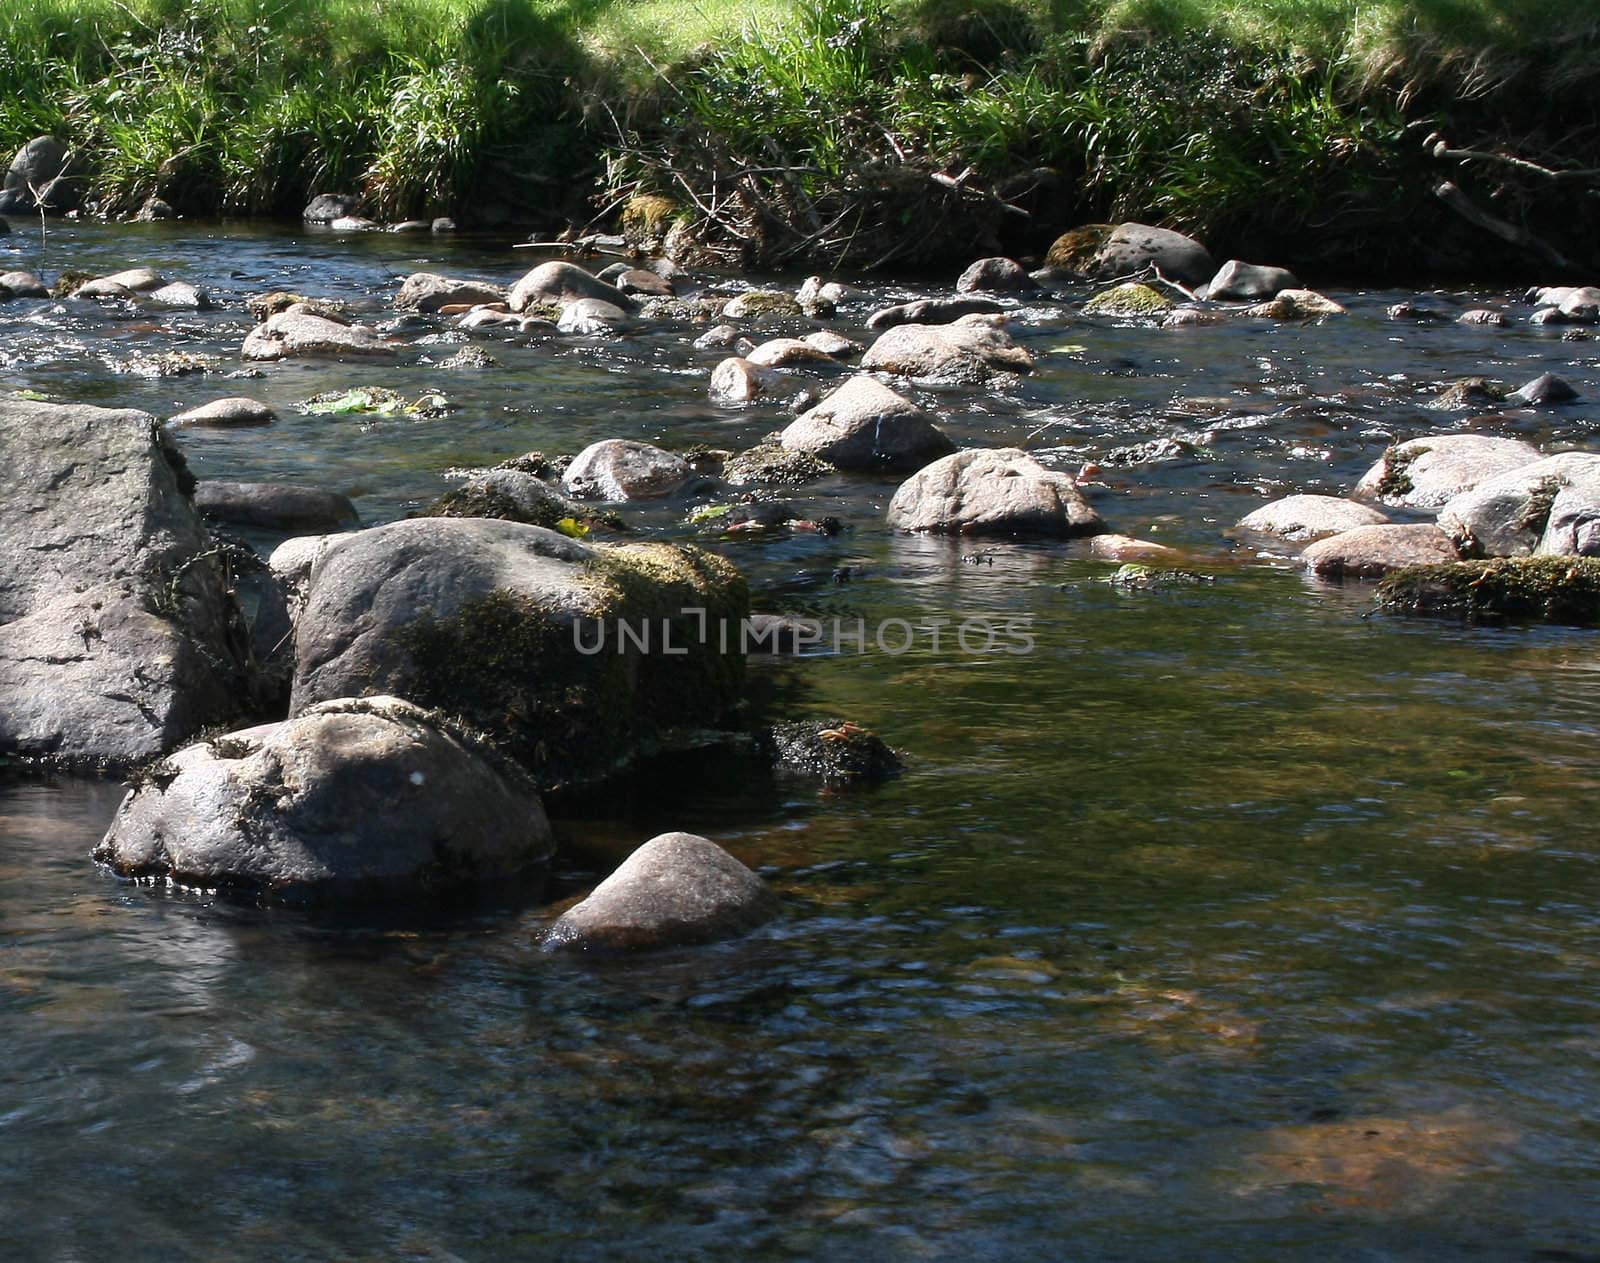 rocky river scene by leafy